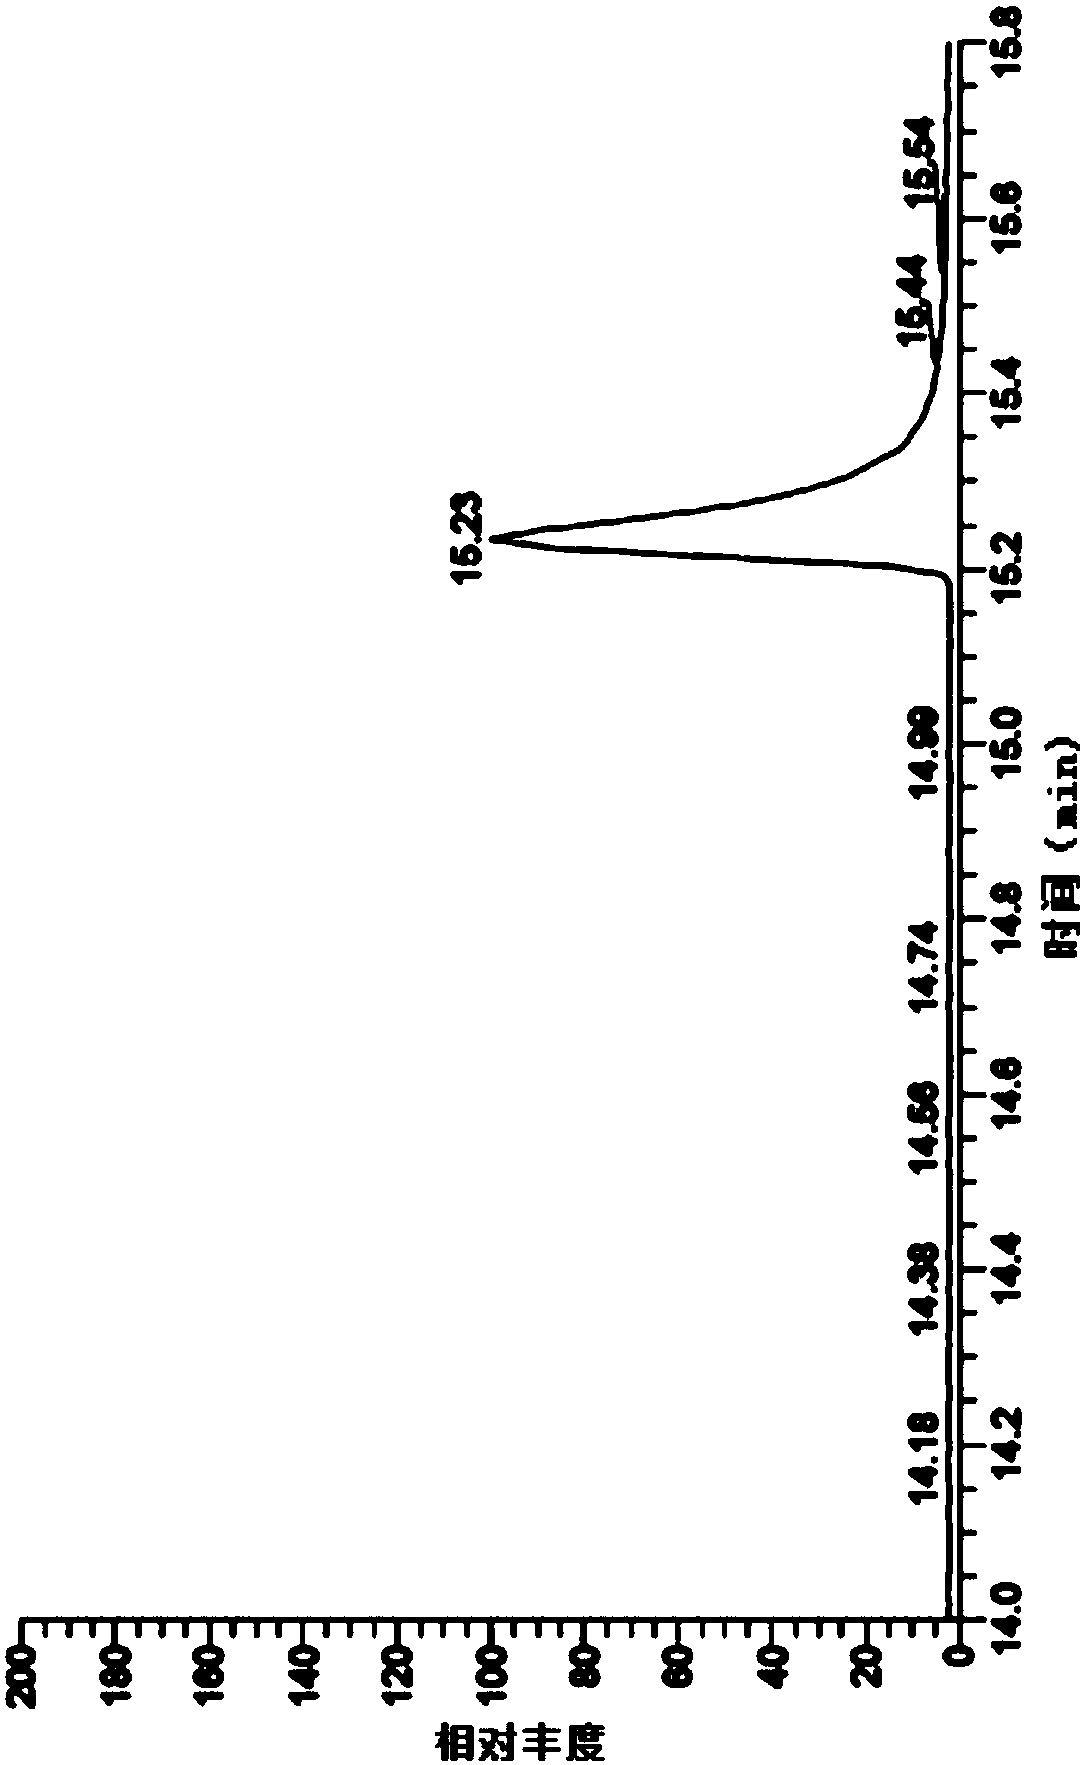 Method for measuring ethyl p-toluenesulfonate as genetic toxicity impurities in ibuprofen